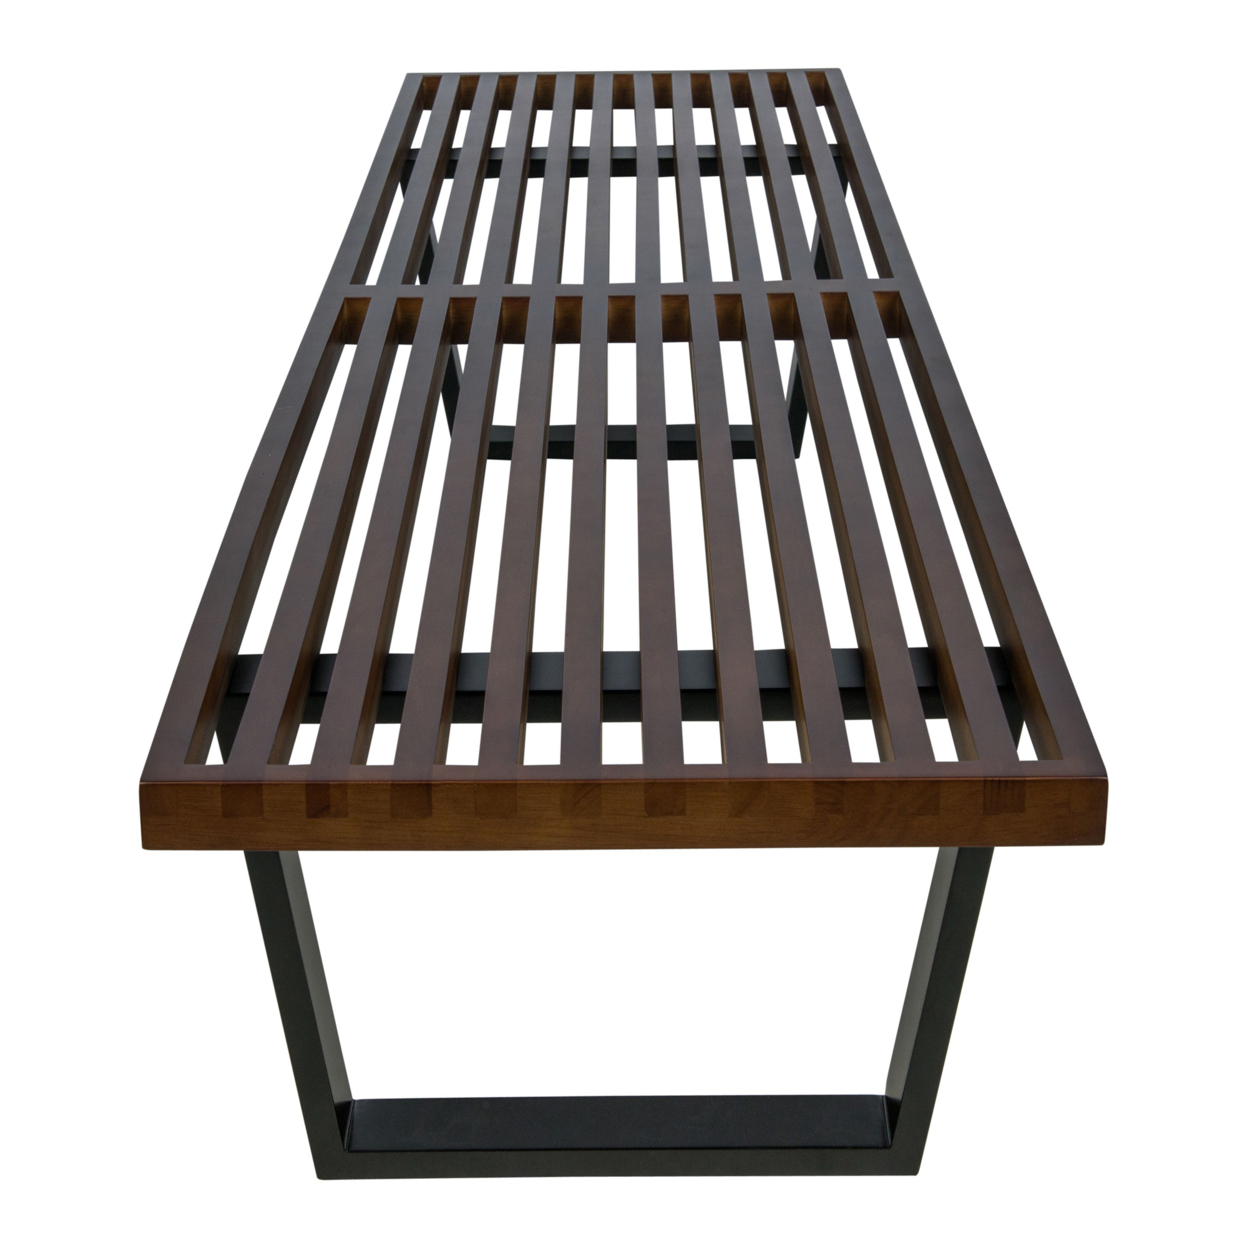 LeisureMod Mid-Century Inwood Platform Bench in Dark Walnut - 6 Feet - image 3 of 7